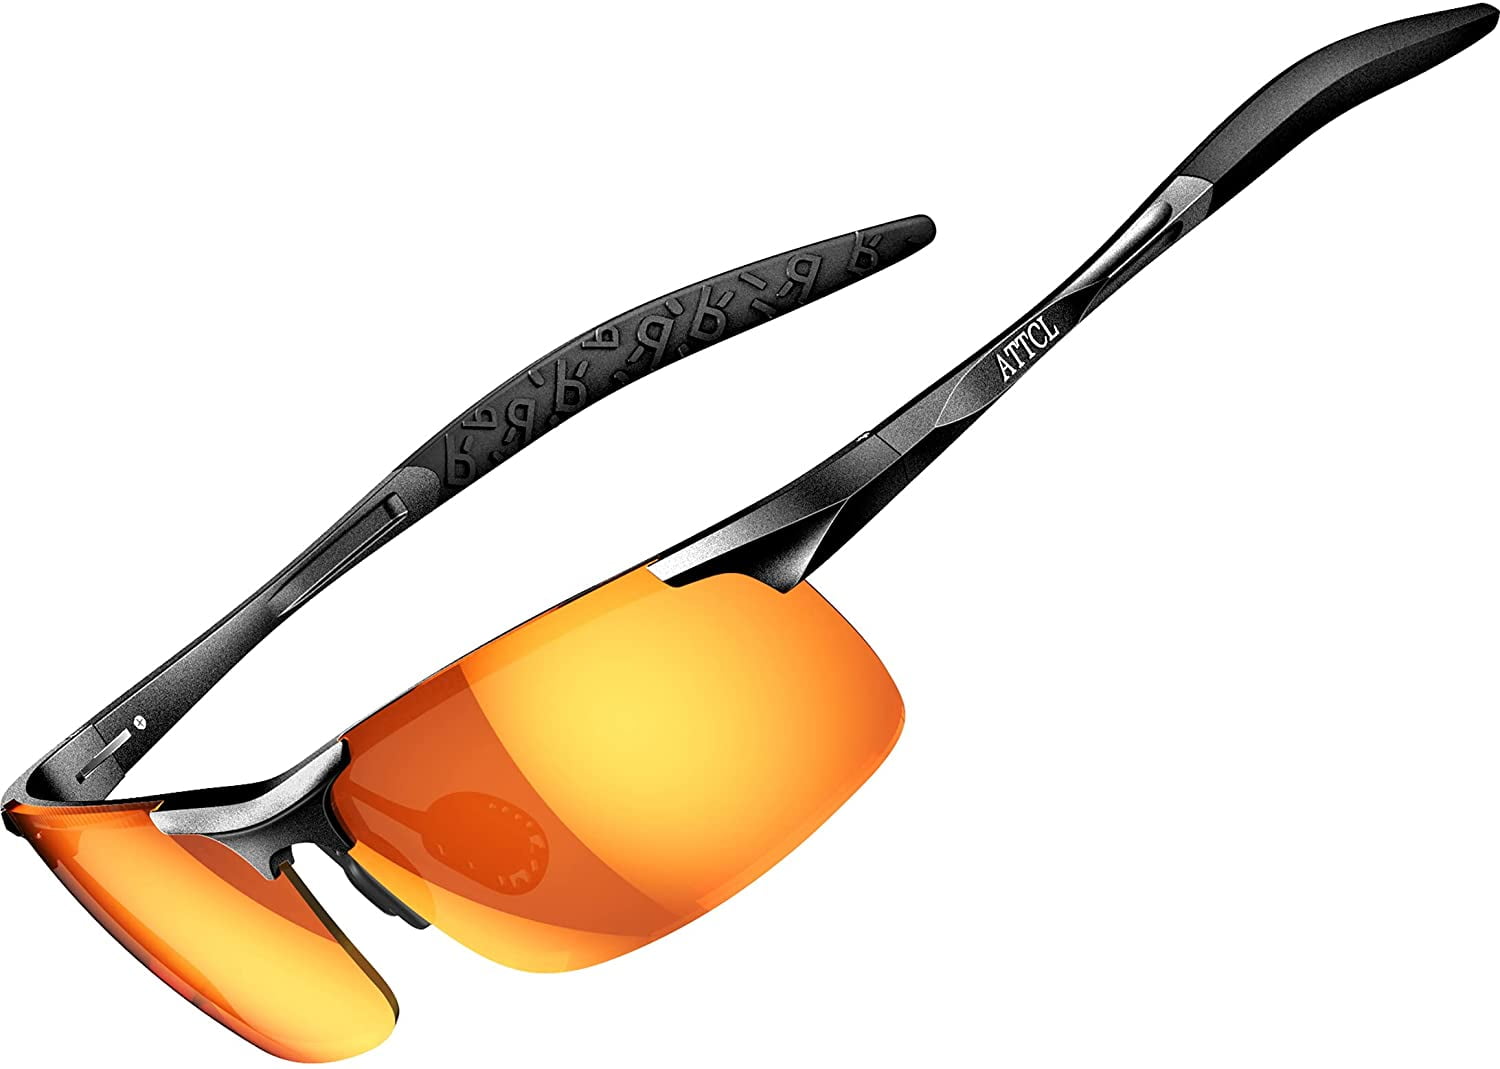 Buy Grey Jack Al-Mg Polarized Sport Sunglasses For Men And Women